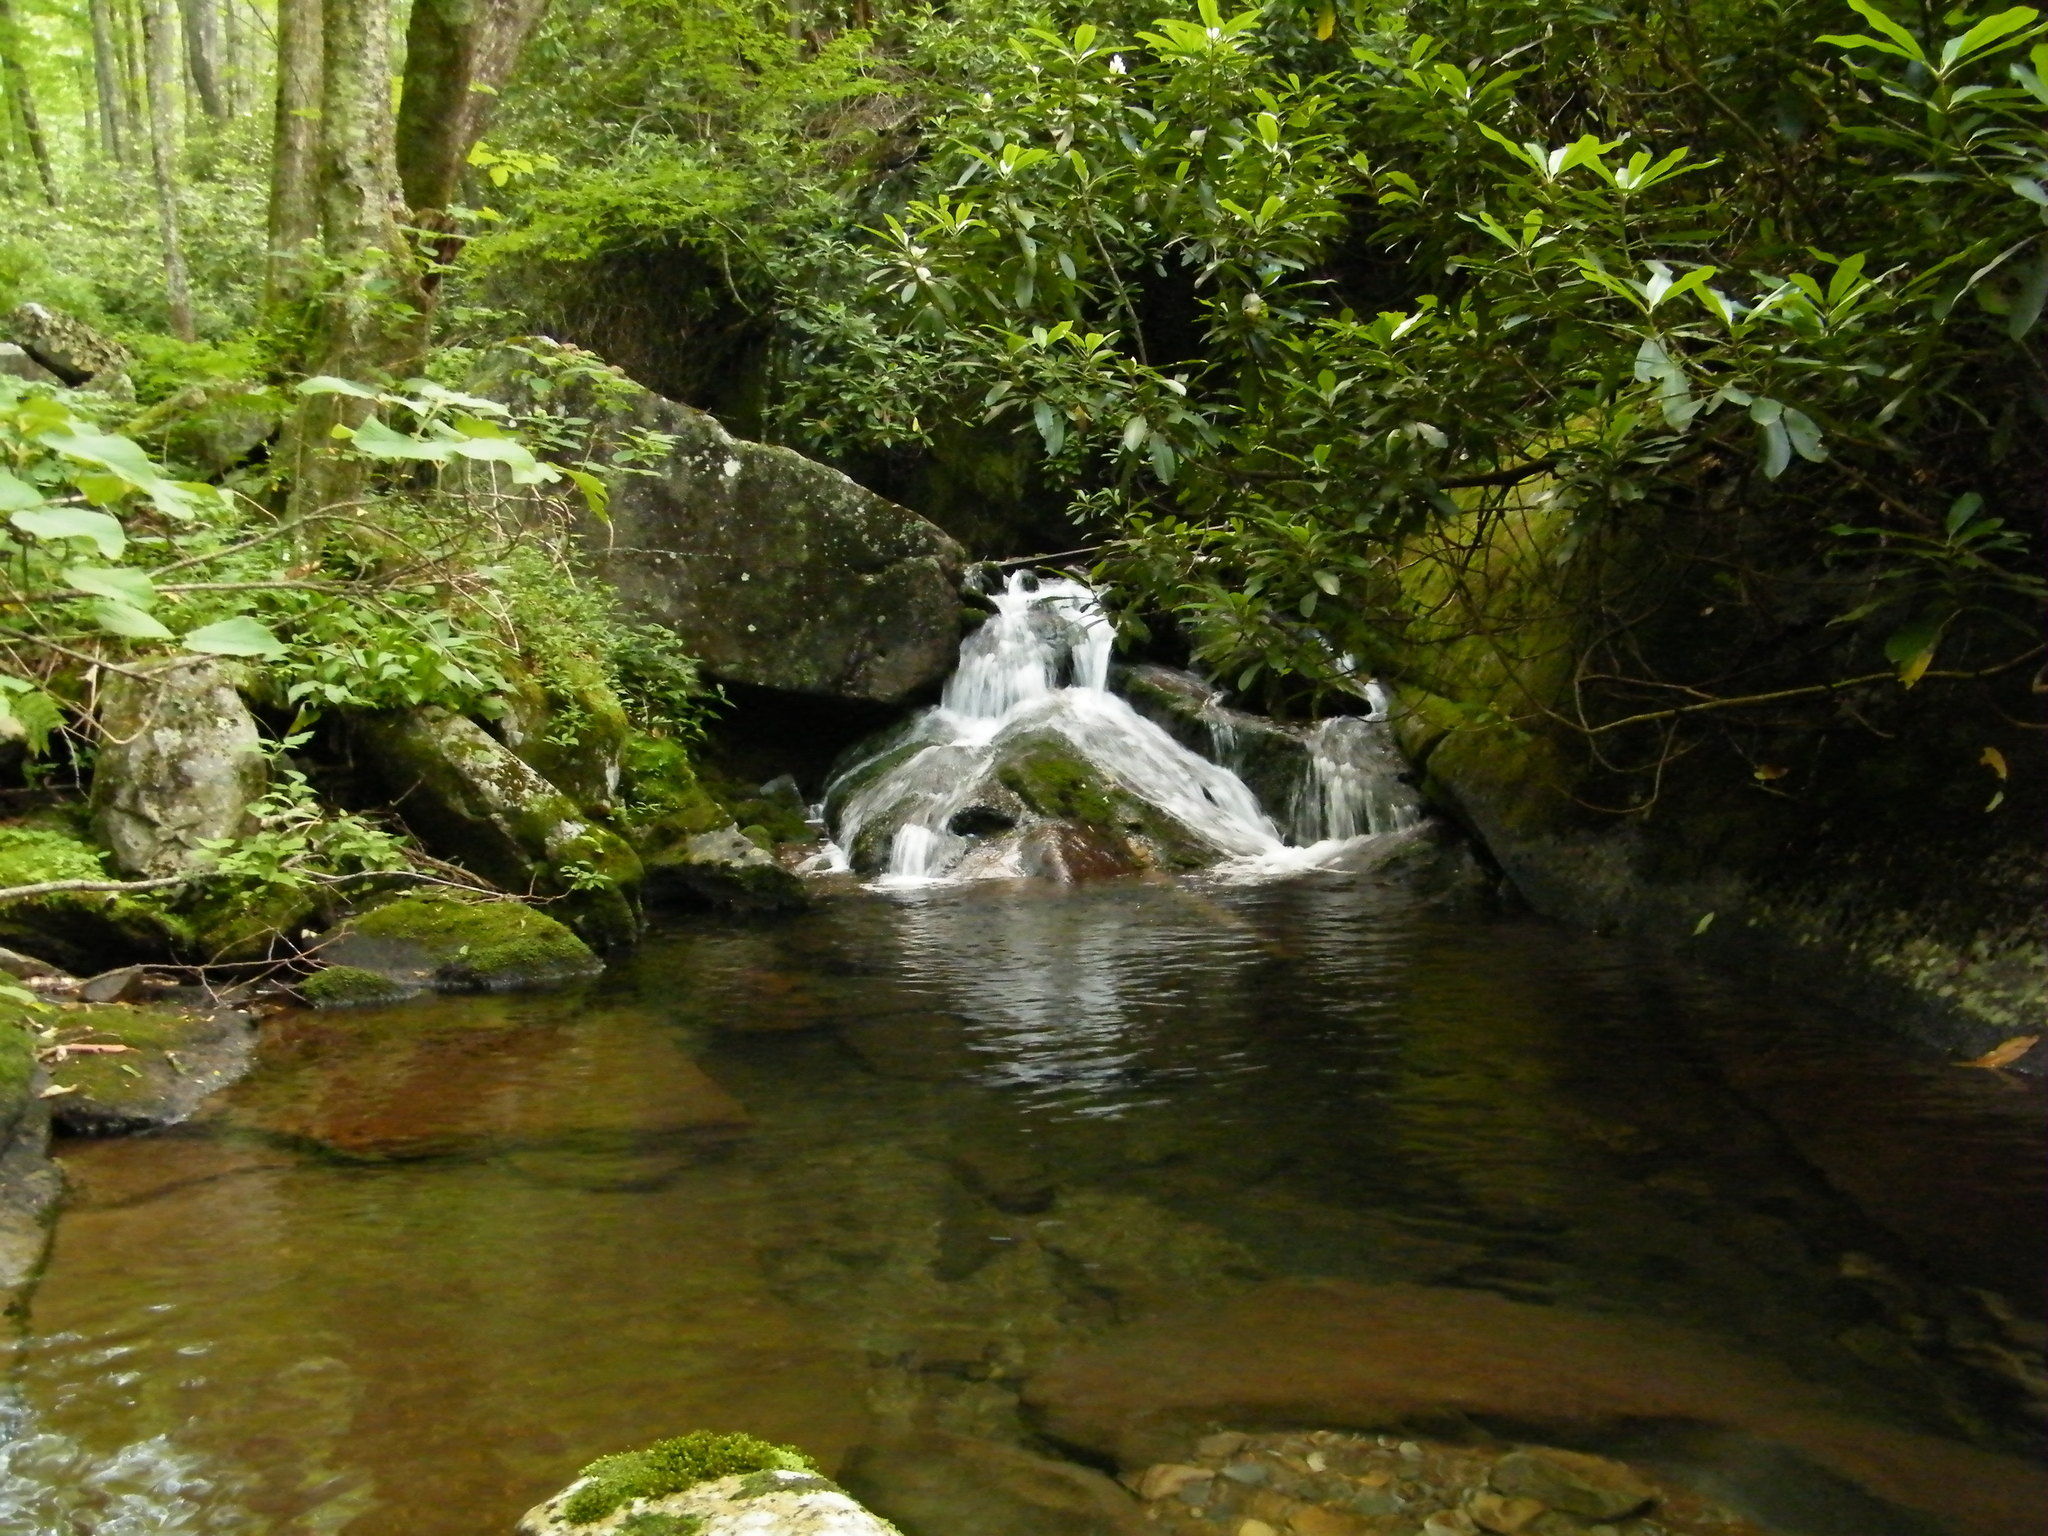 Forney Creek Trail